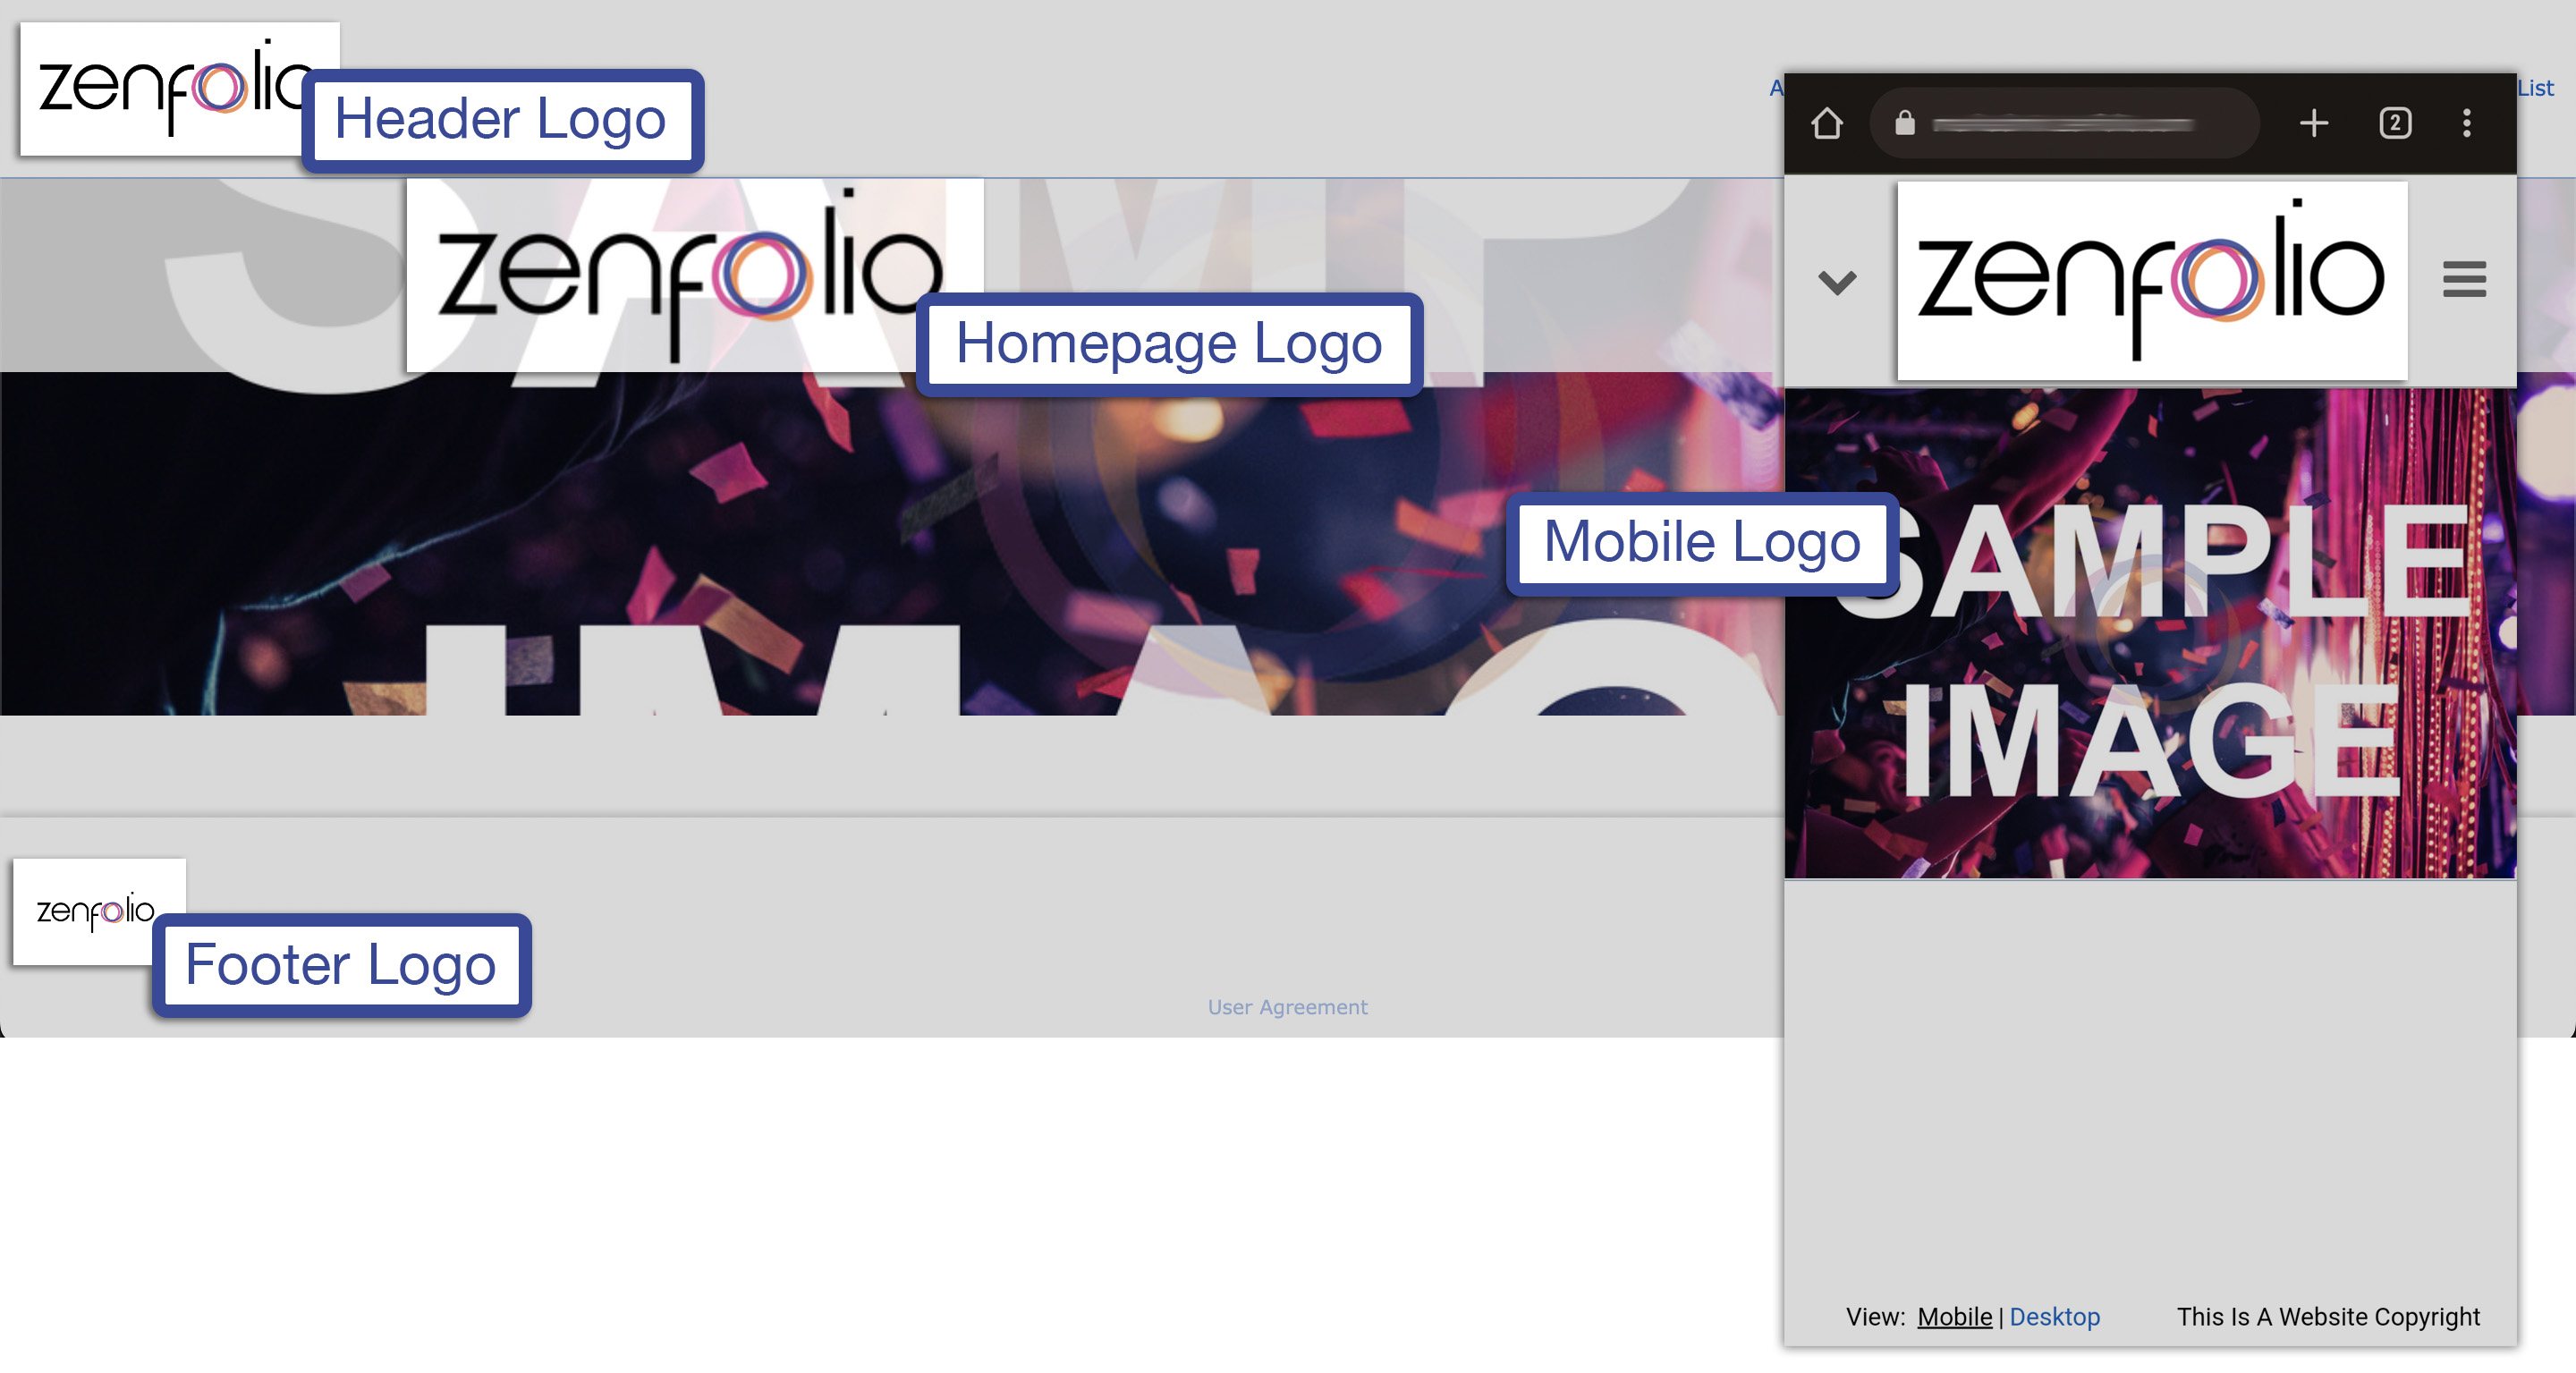 web and mobile logos